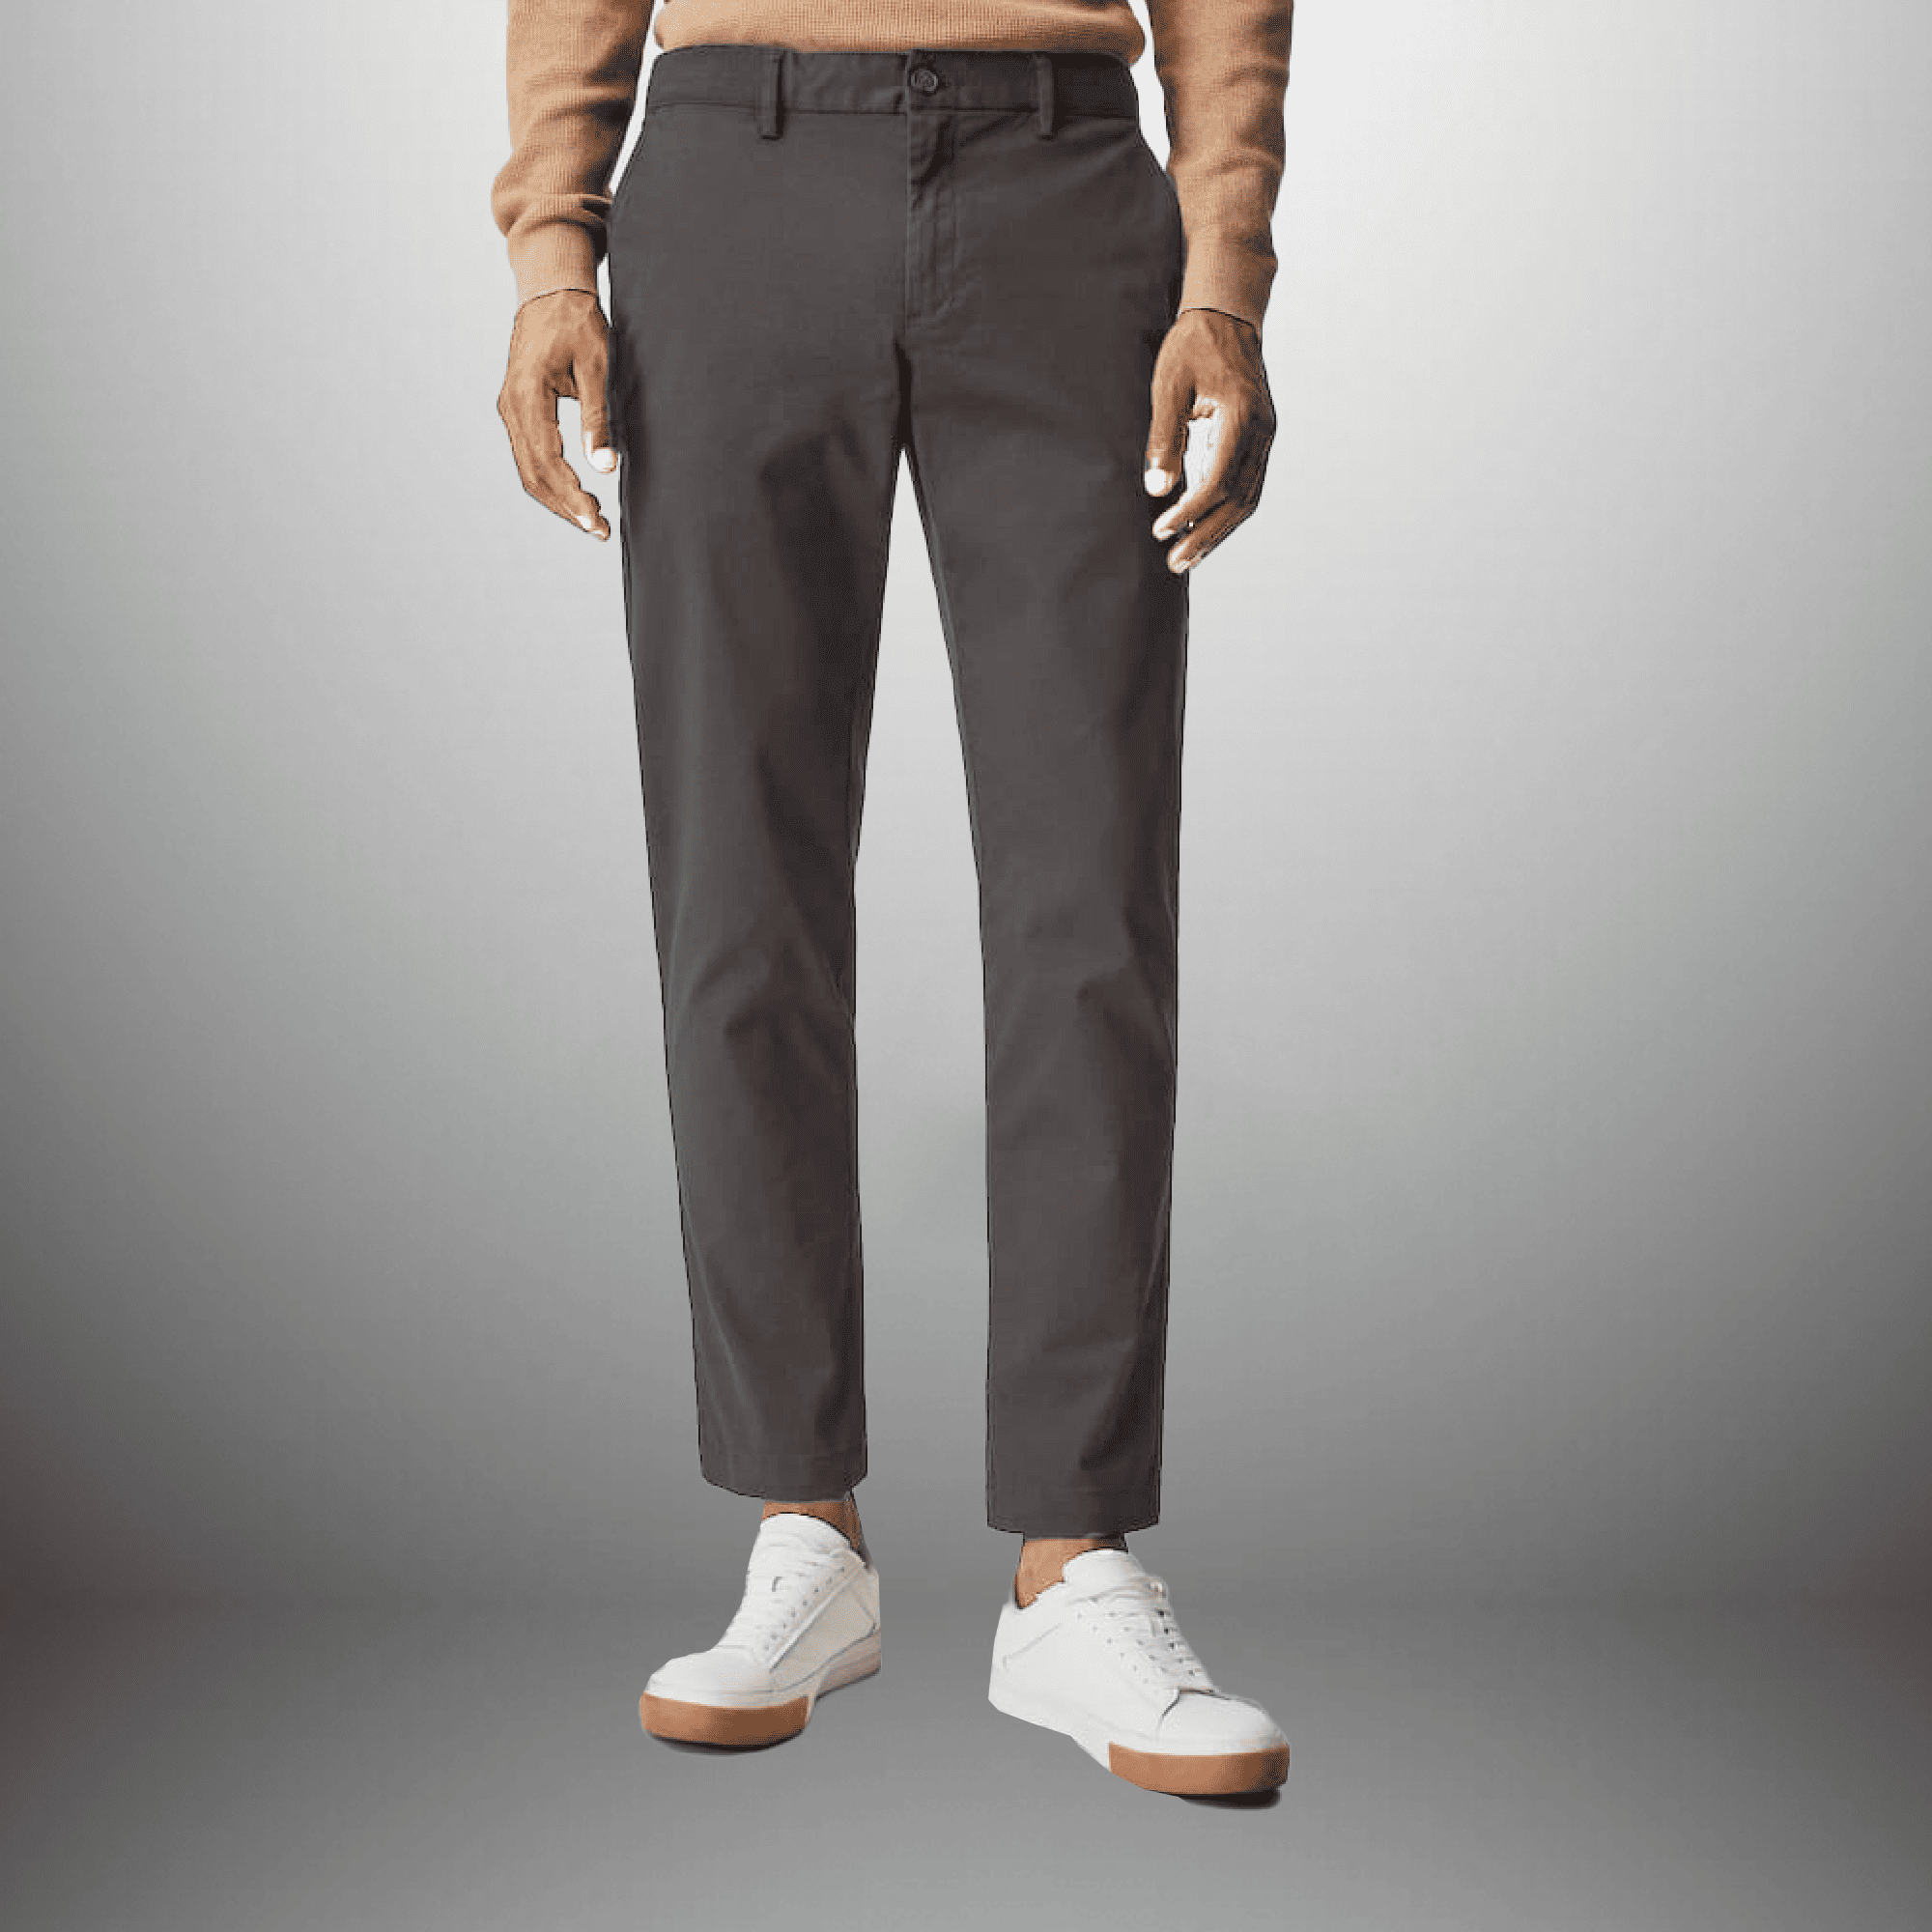 Men's Grey Ankle length Straight Pant-RMT006